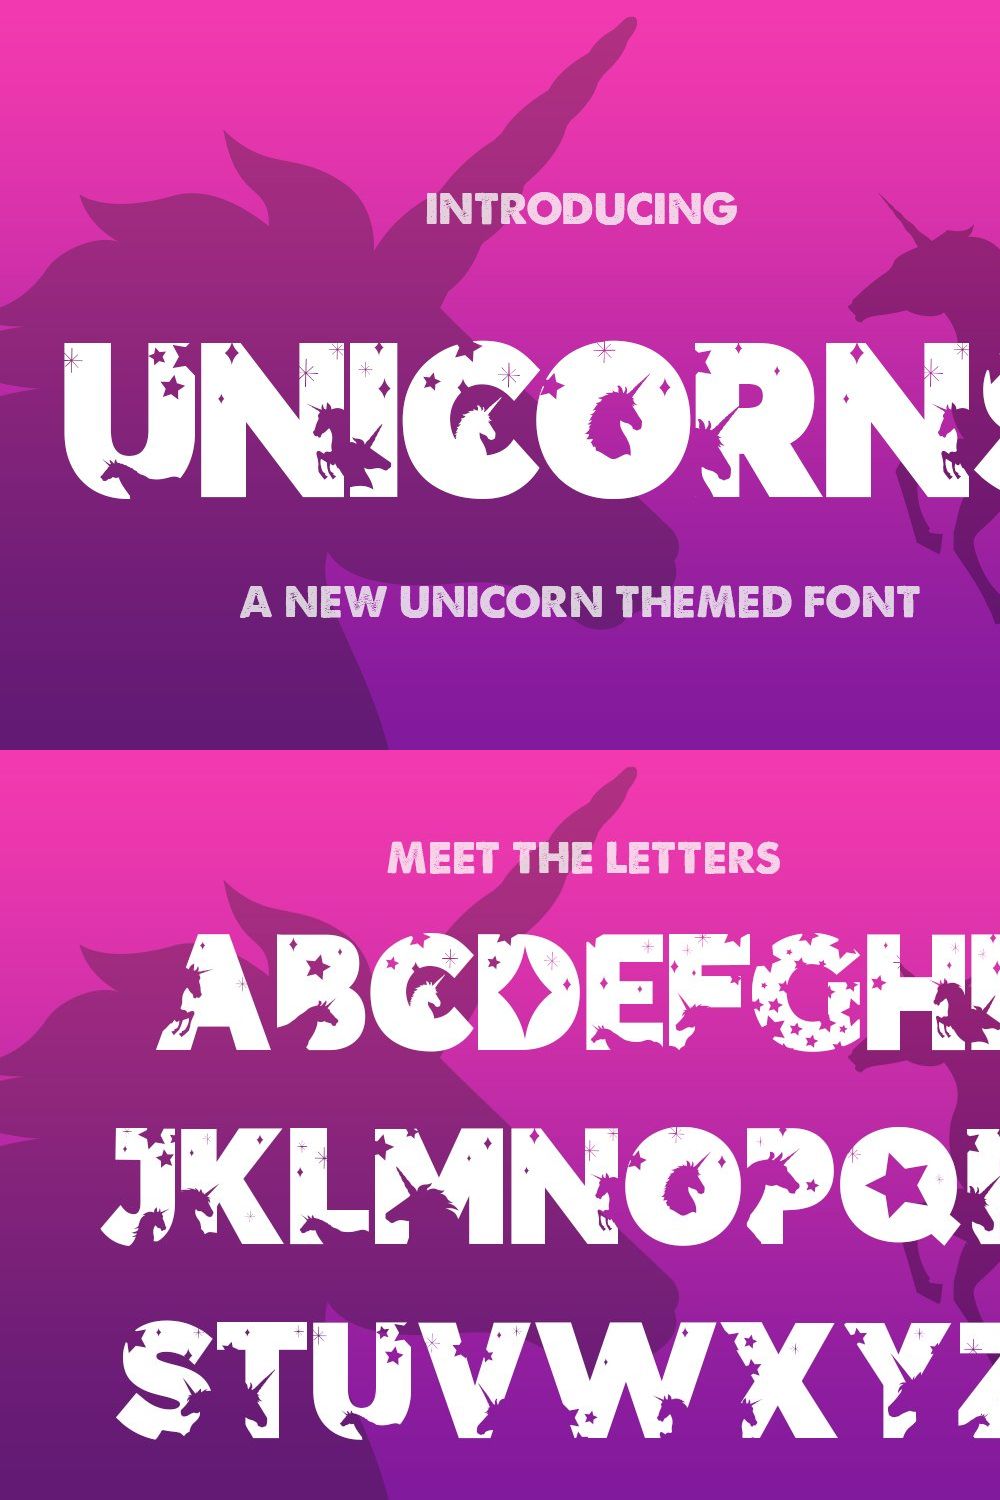 The Unicorns Font pinterest preview image.